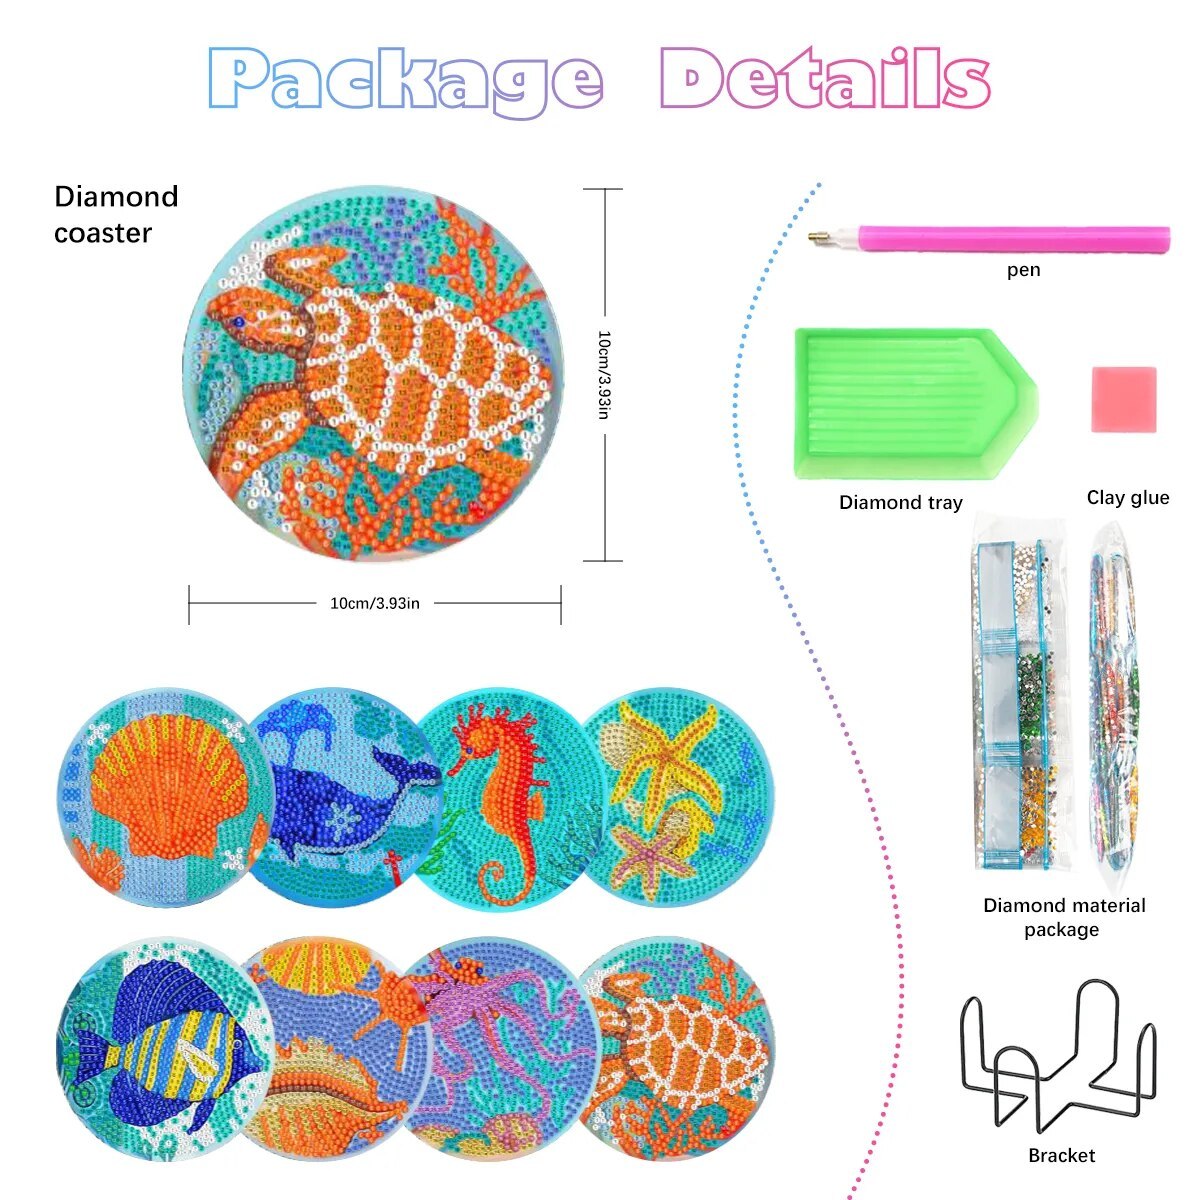 6pc Diamond Painting Coasters Kits With Holder - Mandala Cut Outs